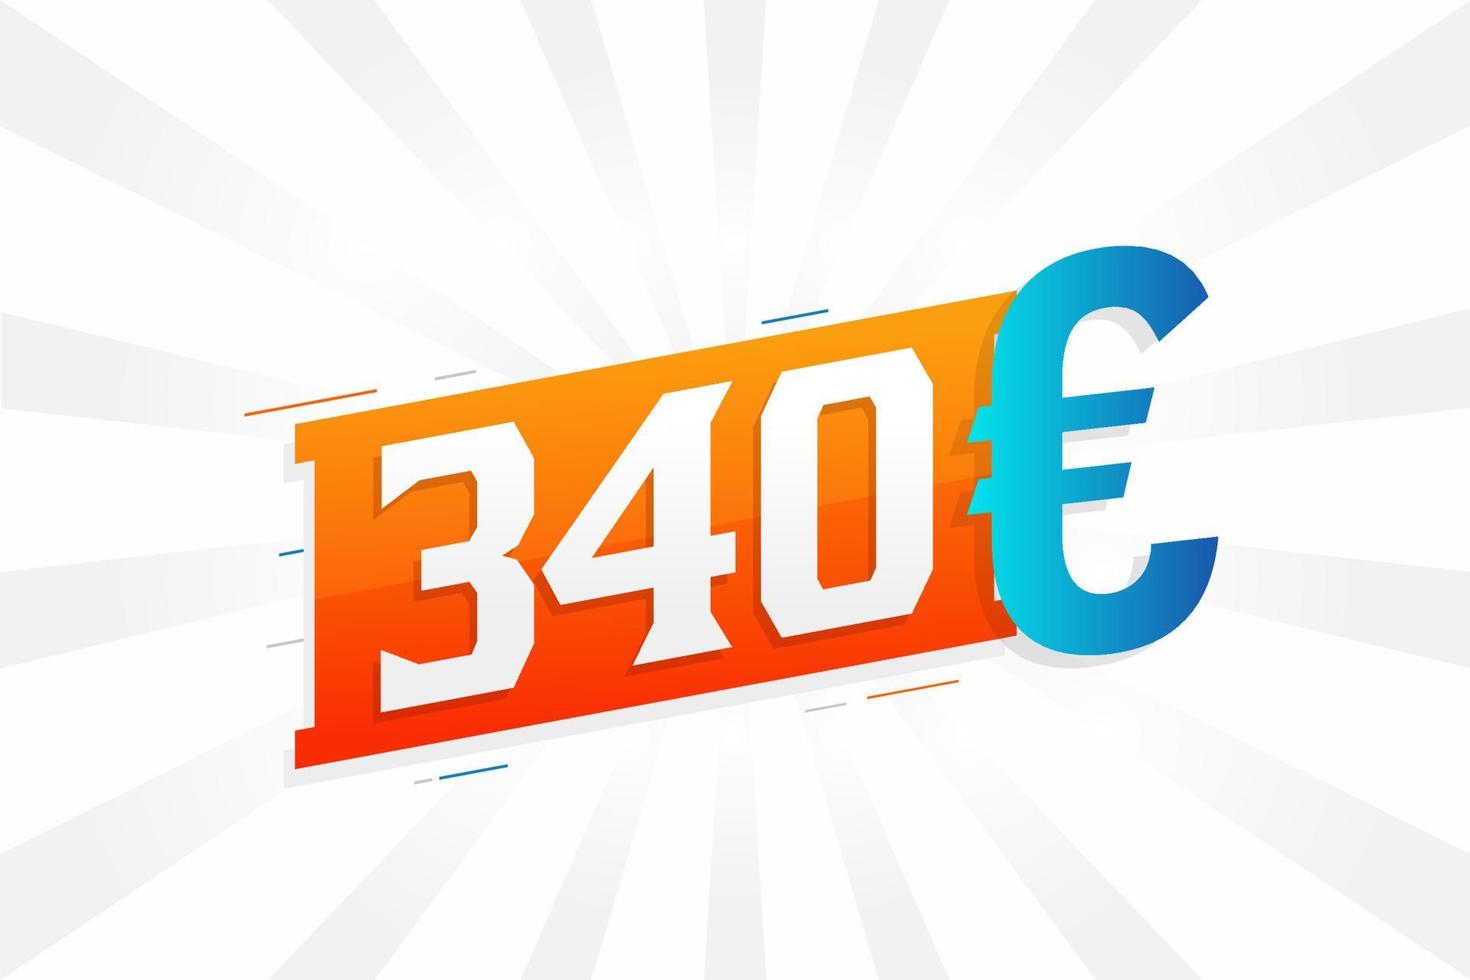 340 euro valuta vektor text symbol. 340 euro europeisk union pengar stock vektor